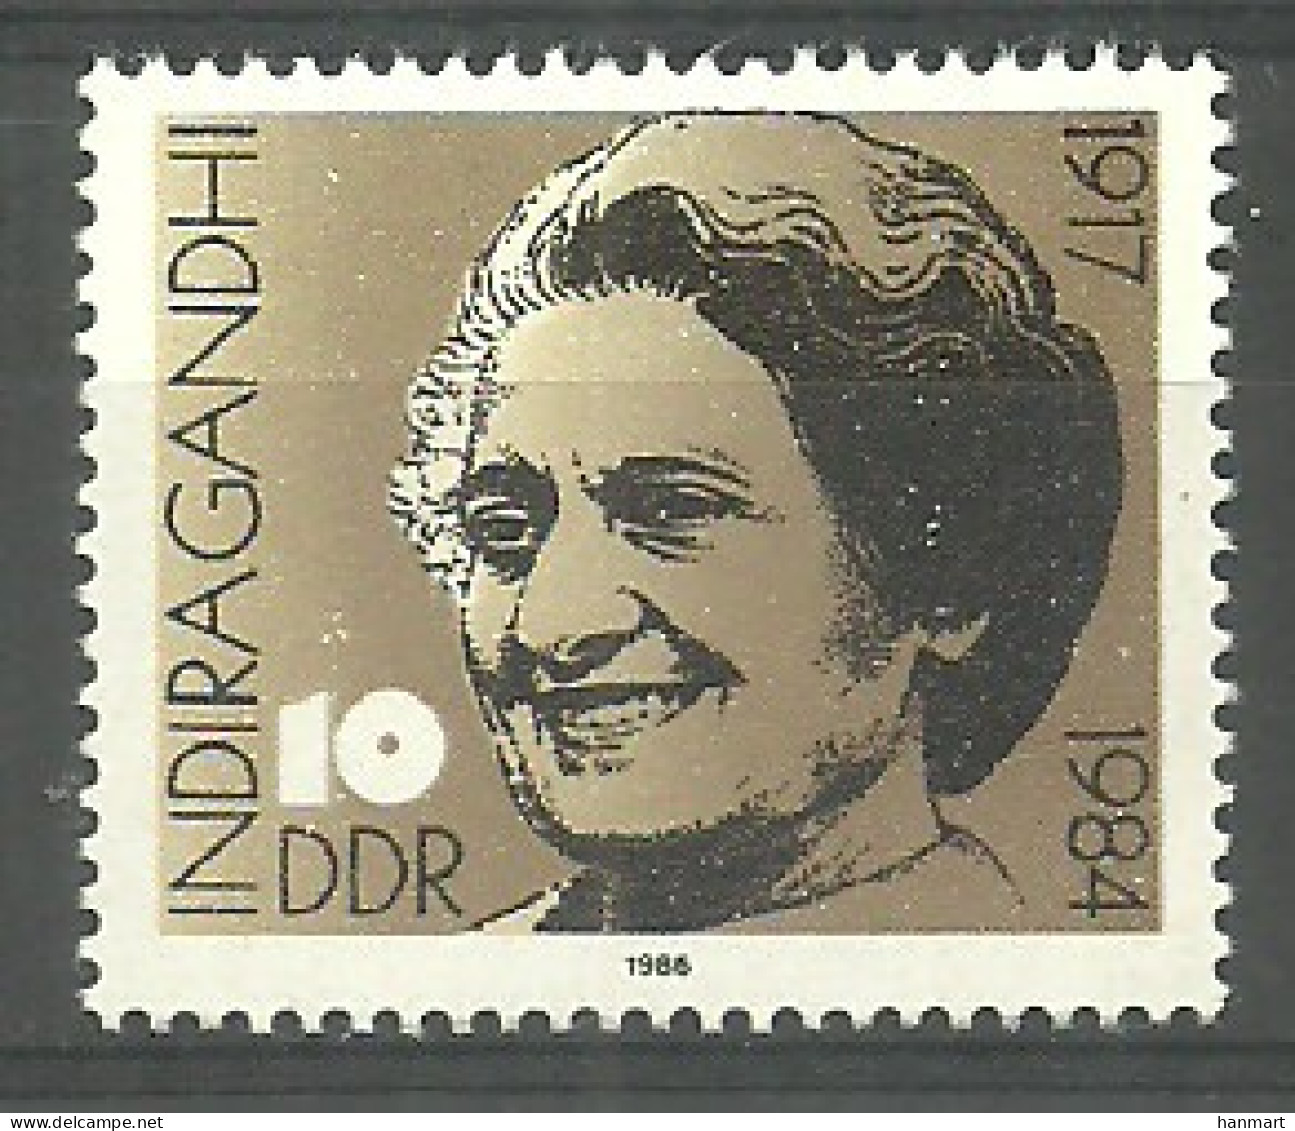 Germany, Democratic Republic (DDR) 1986 Mi 3056 MNH  (ZE5 DDR3056) - Berühmte Frauen